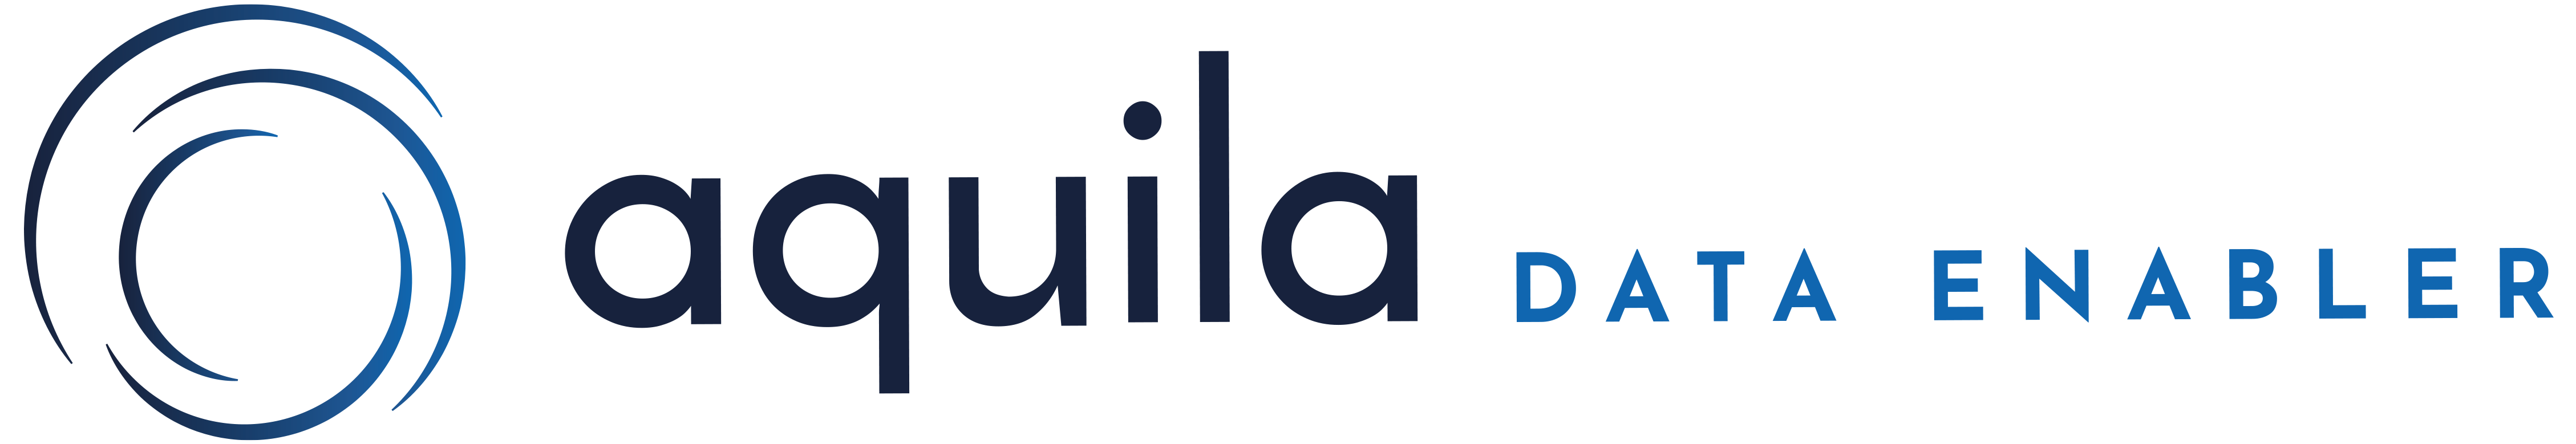 Logo adherent AQUILA DATA ENABLER